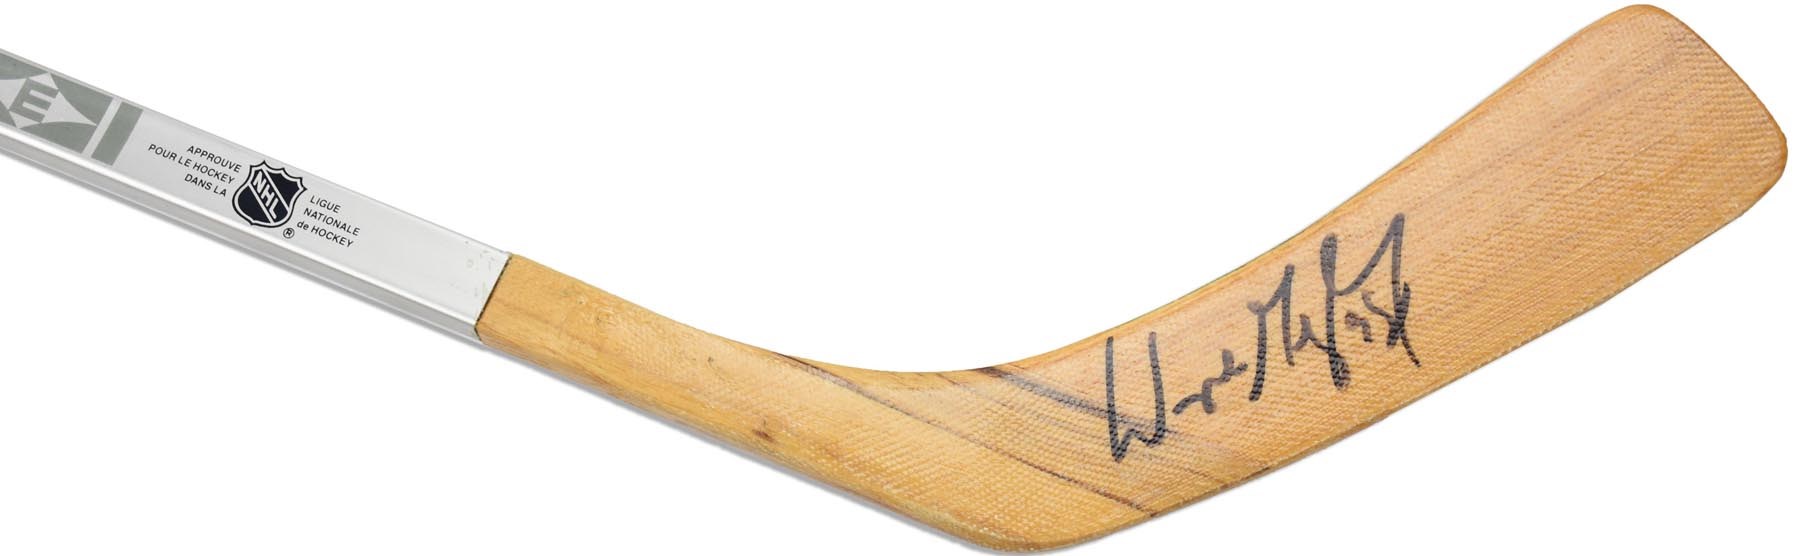 Wayne Gretzky Signed Stick